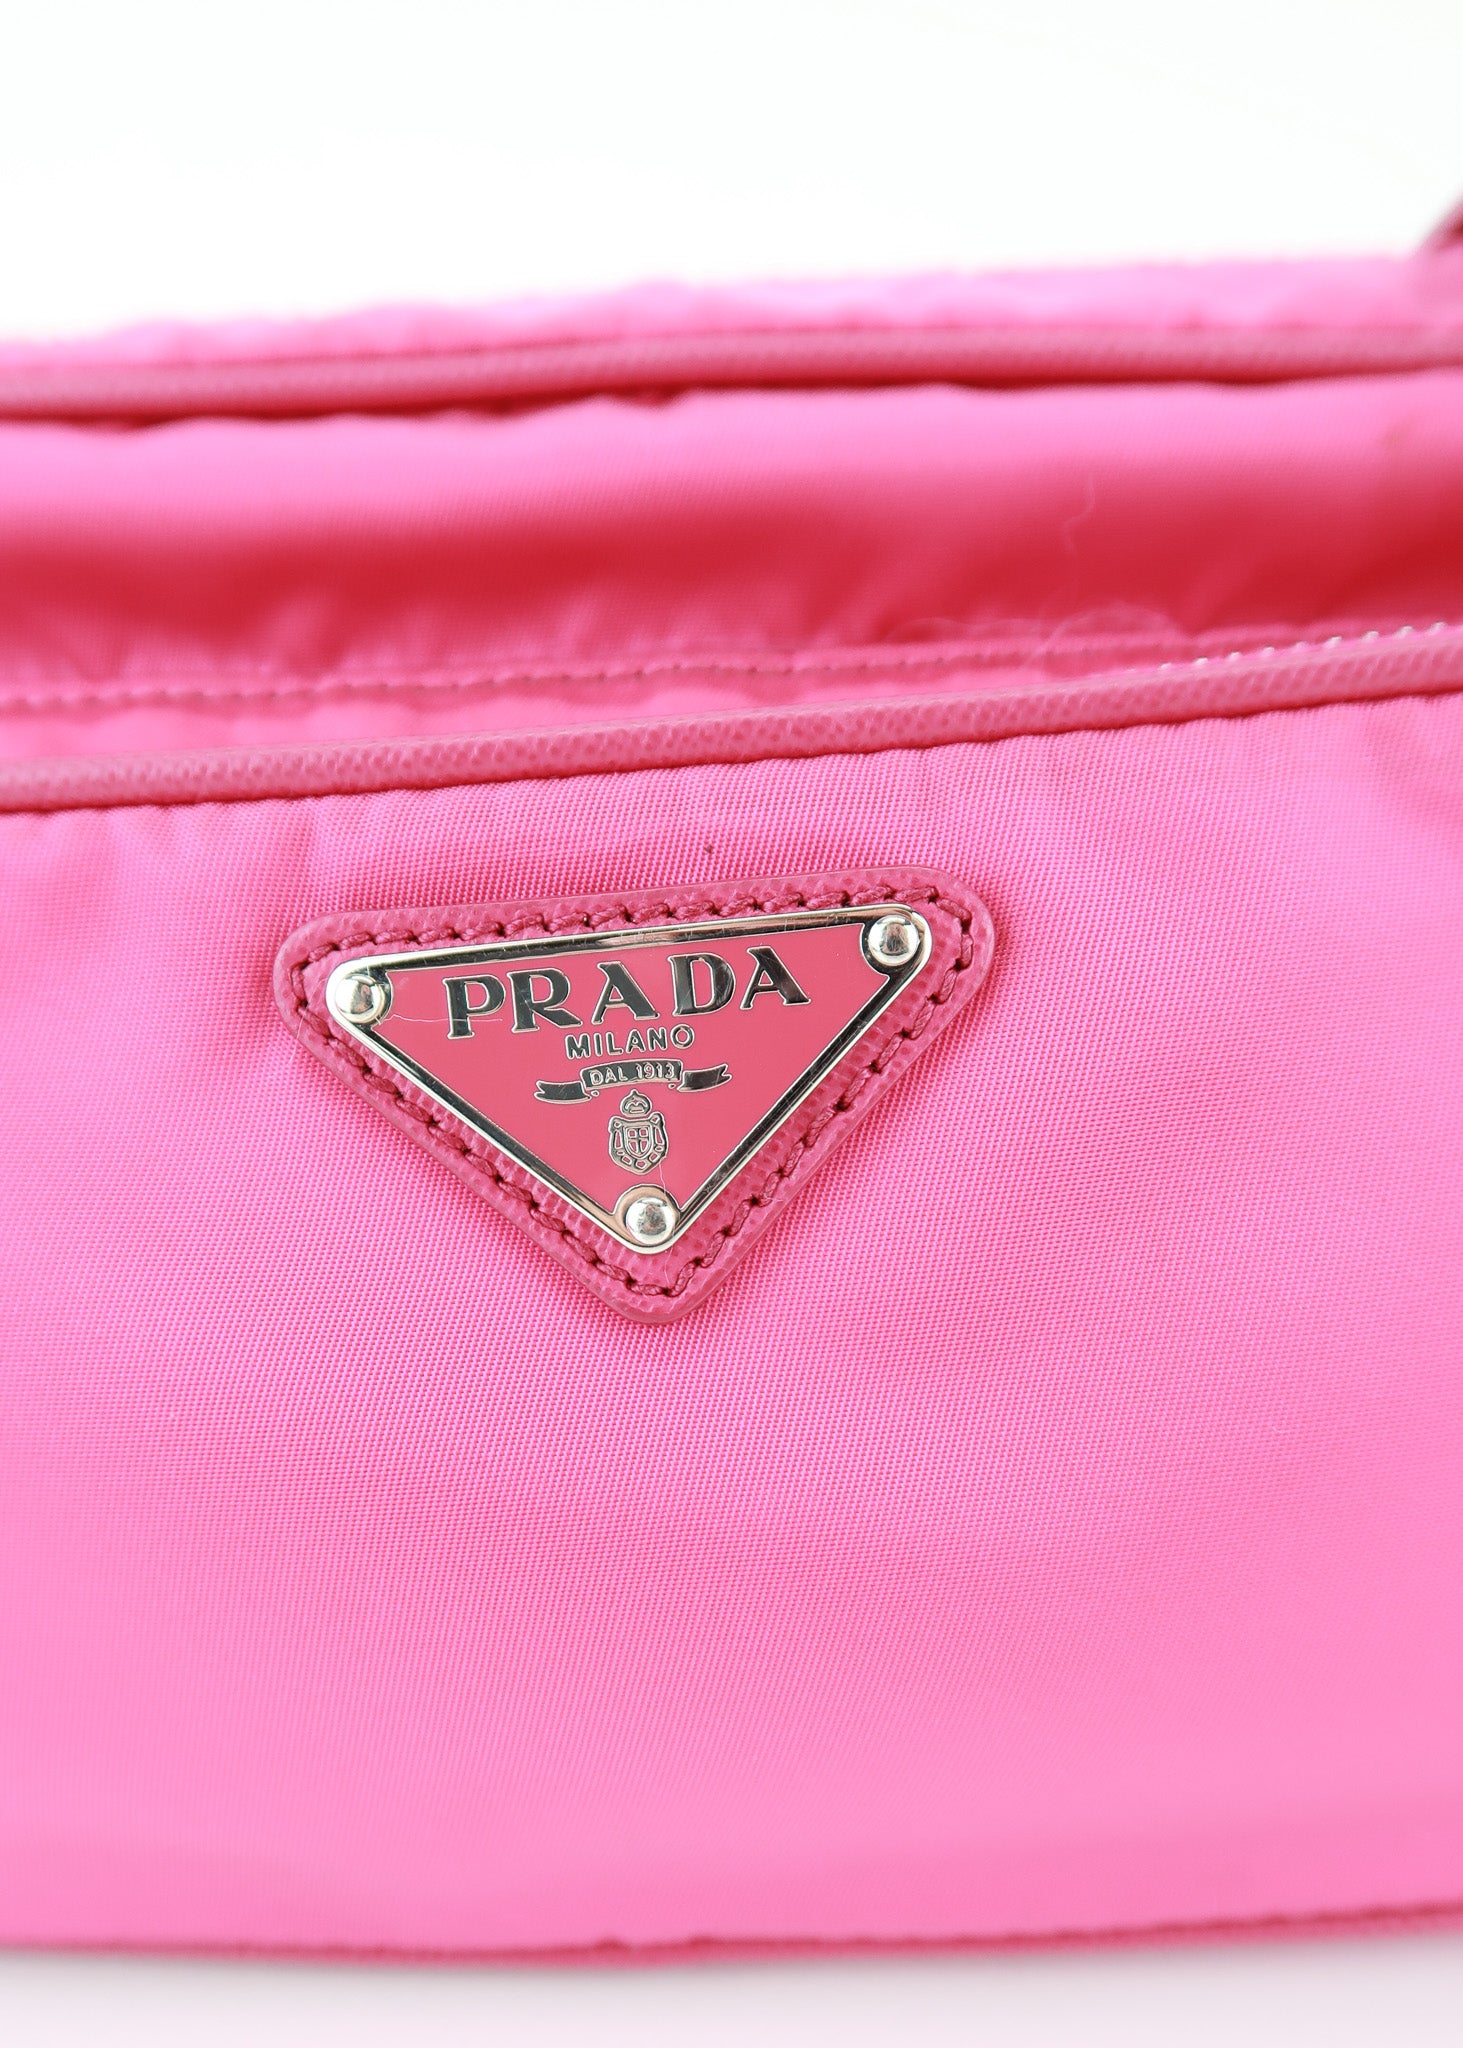 Prada + Pink Nylon/Leather Crossbody Bag